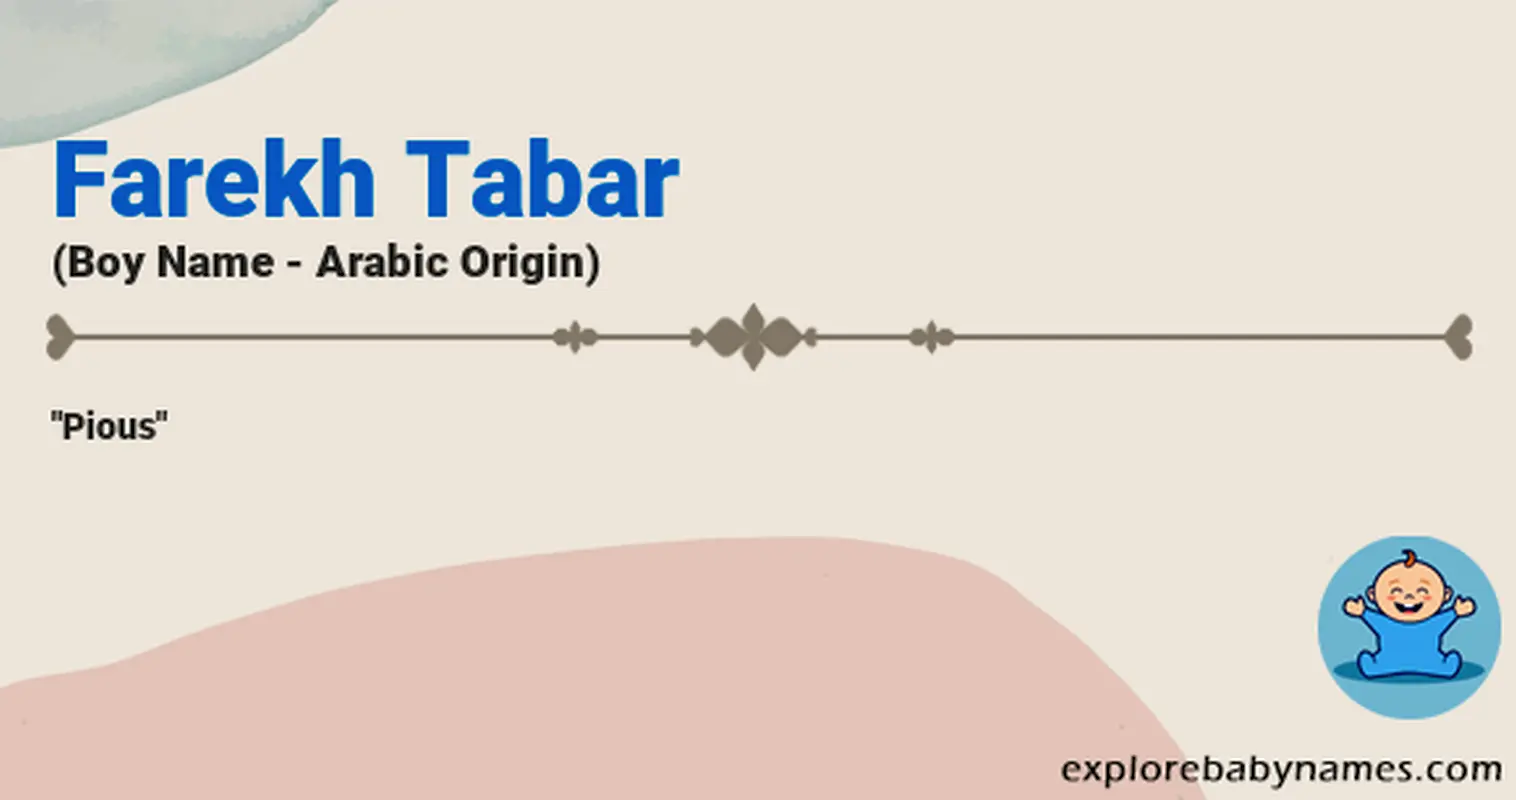 Meaning of Farekh Tabar